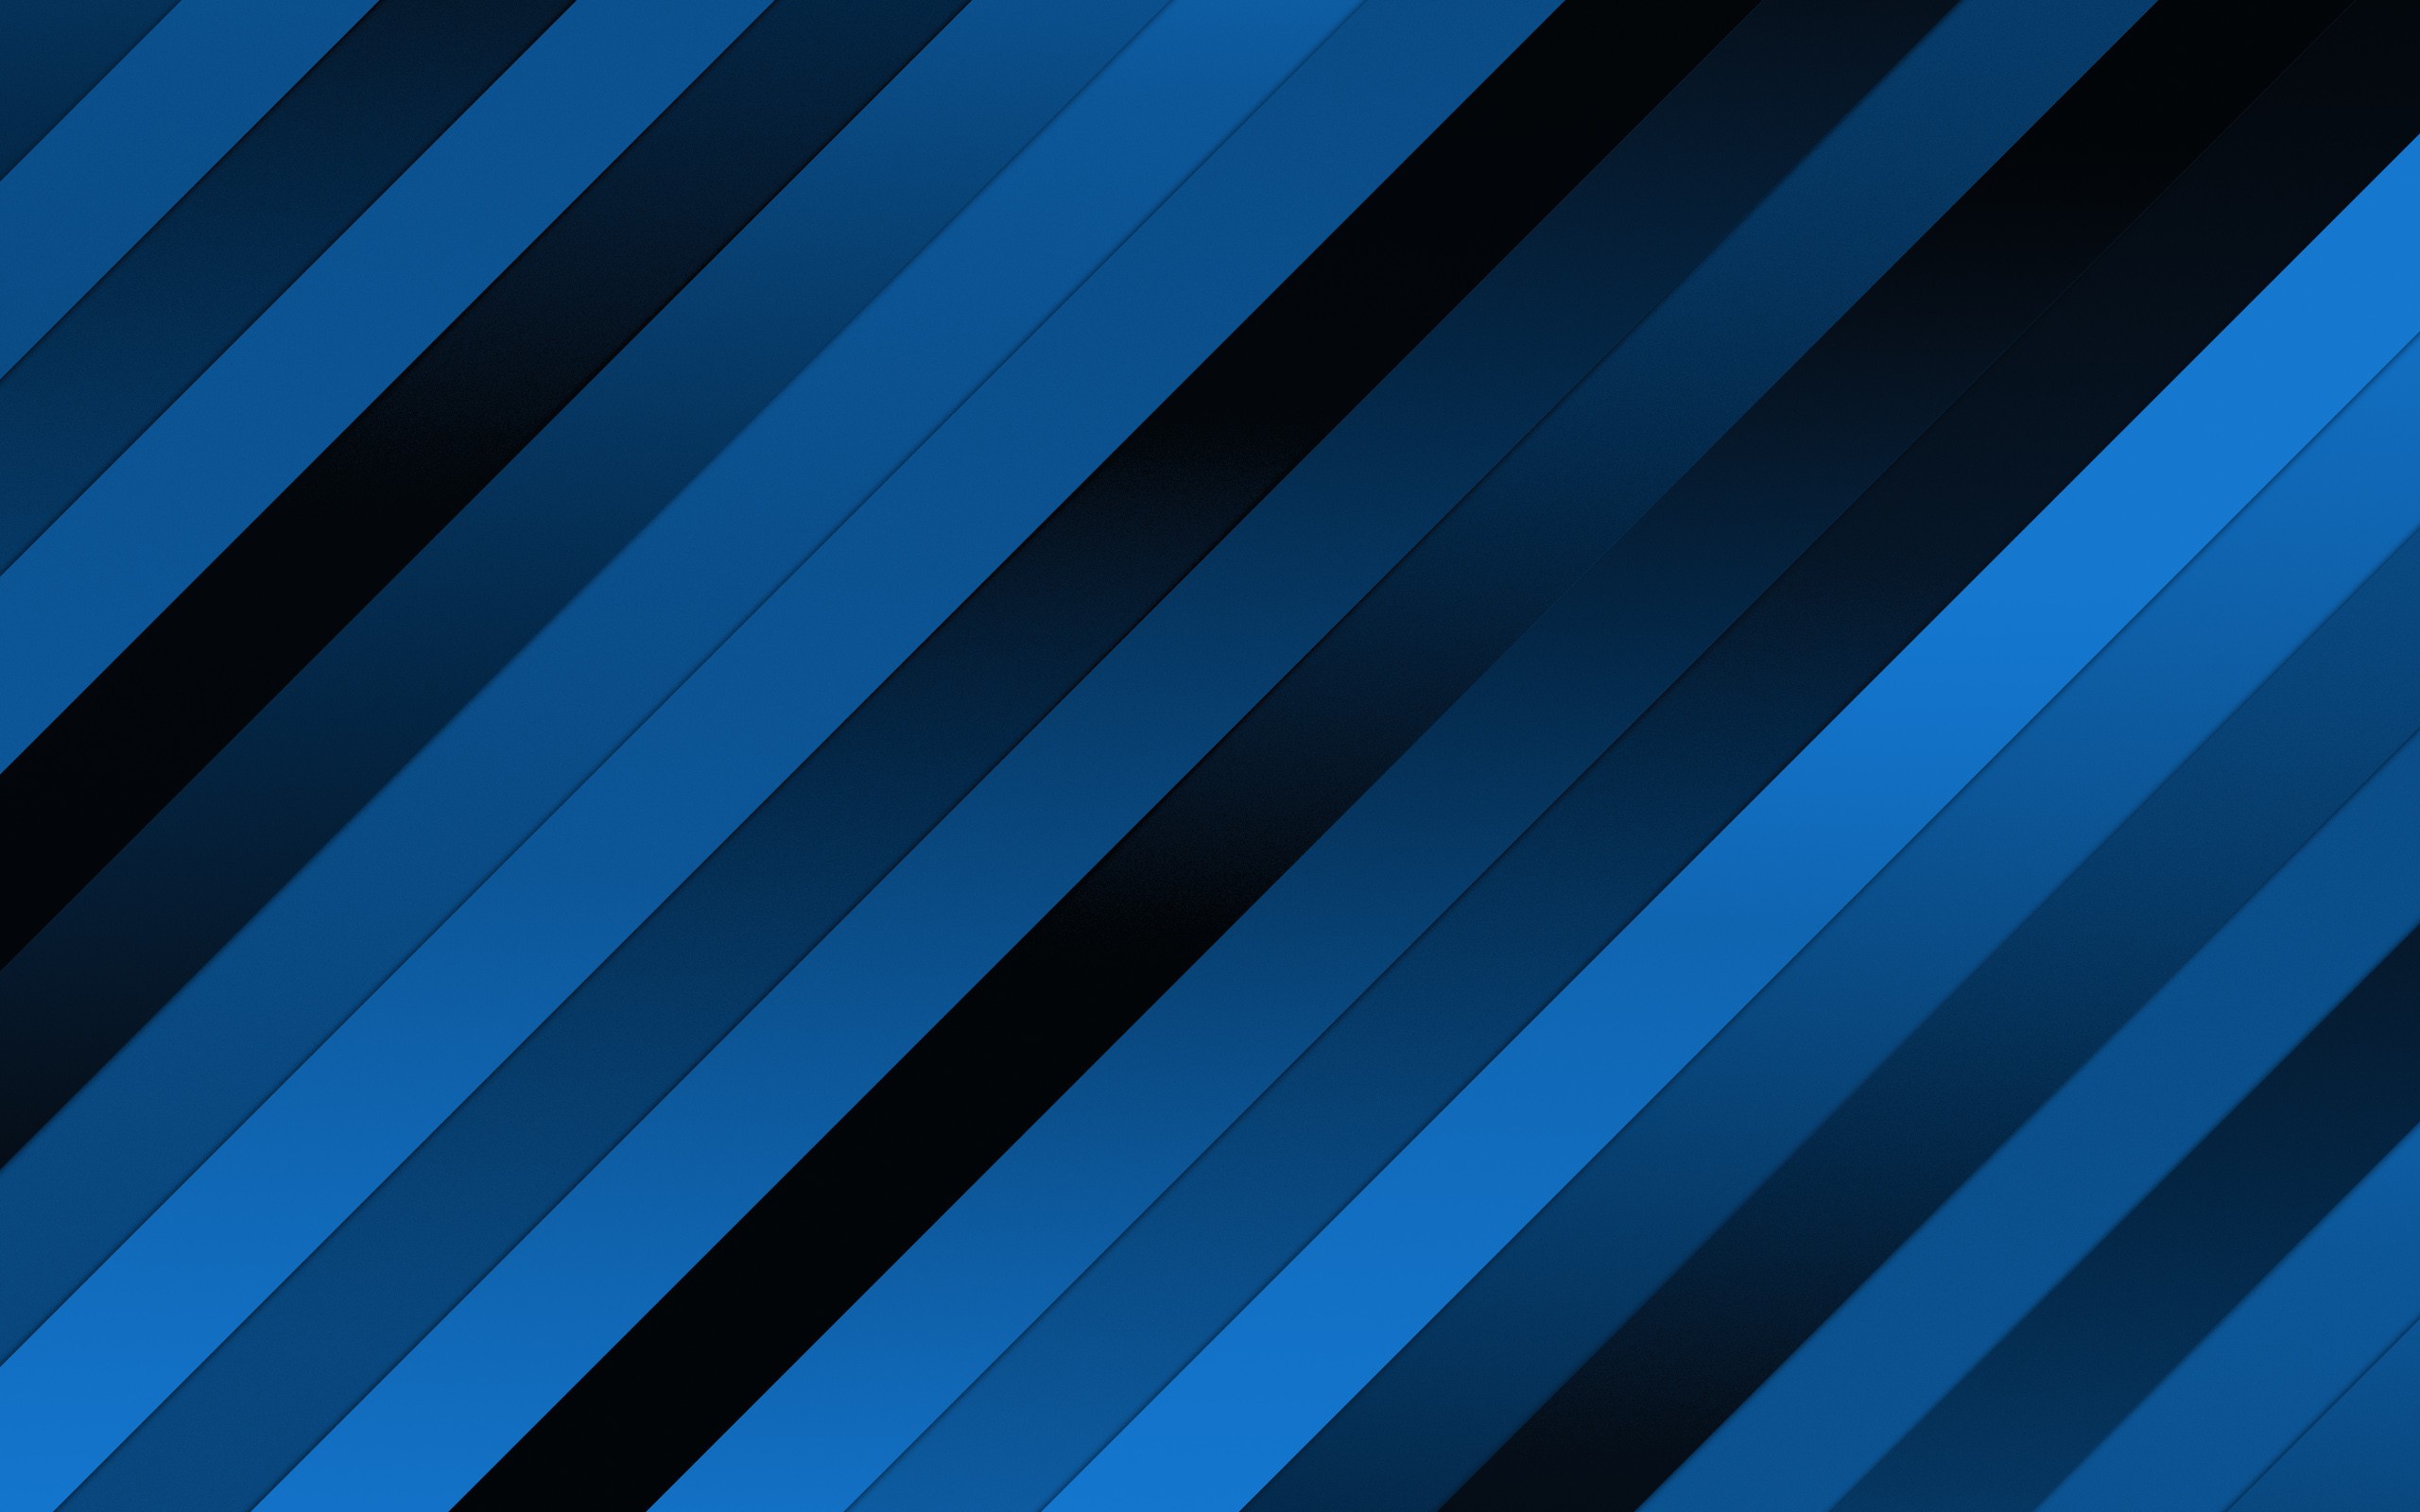  44  Blue Wallpaper Designs on WallpaperSafari